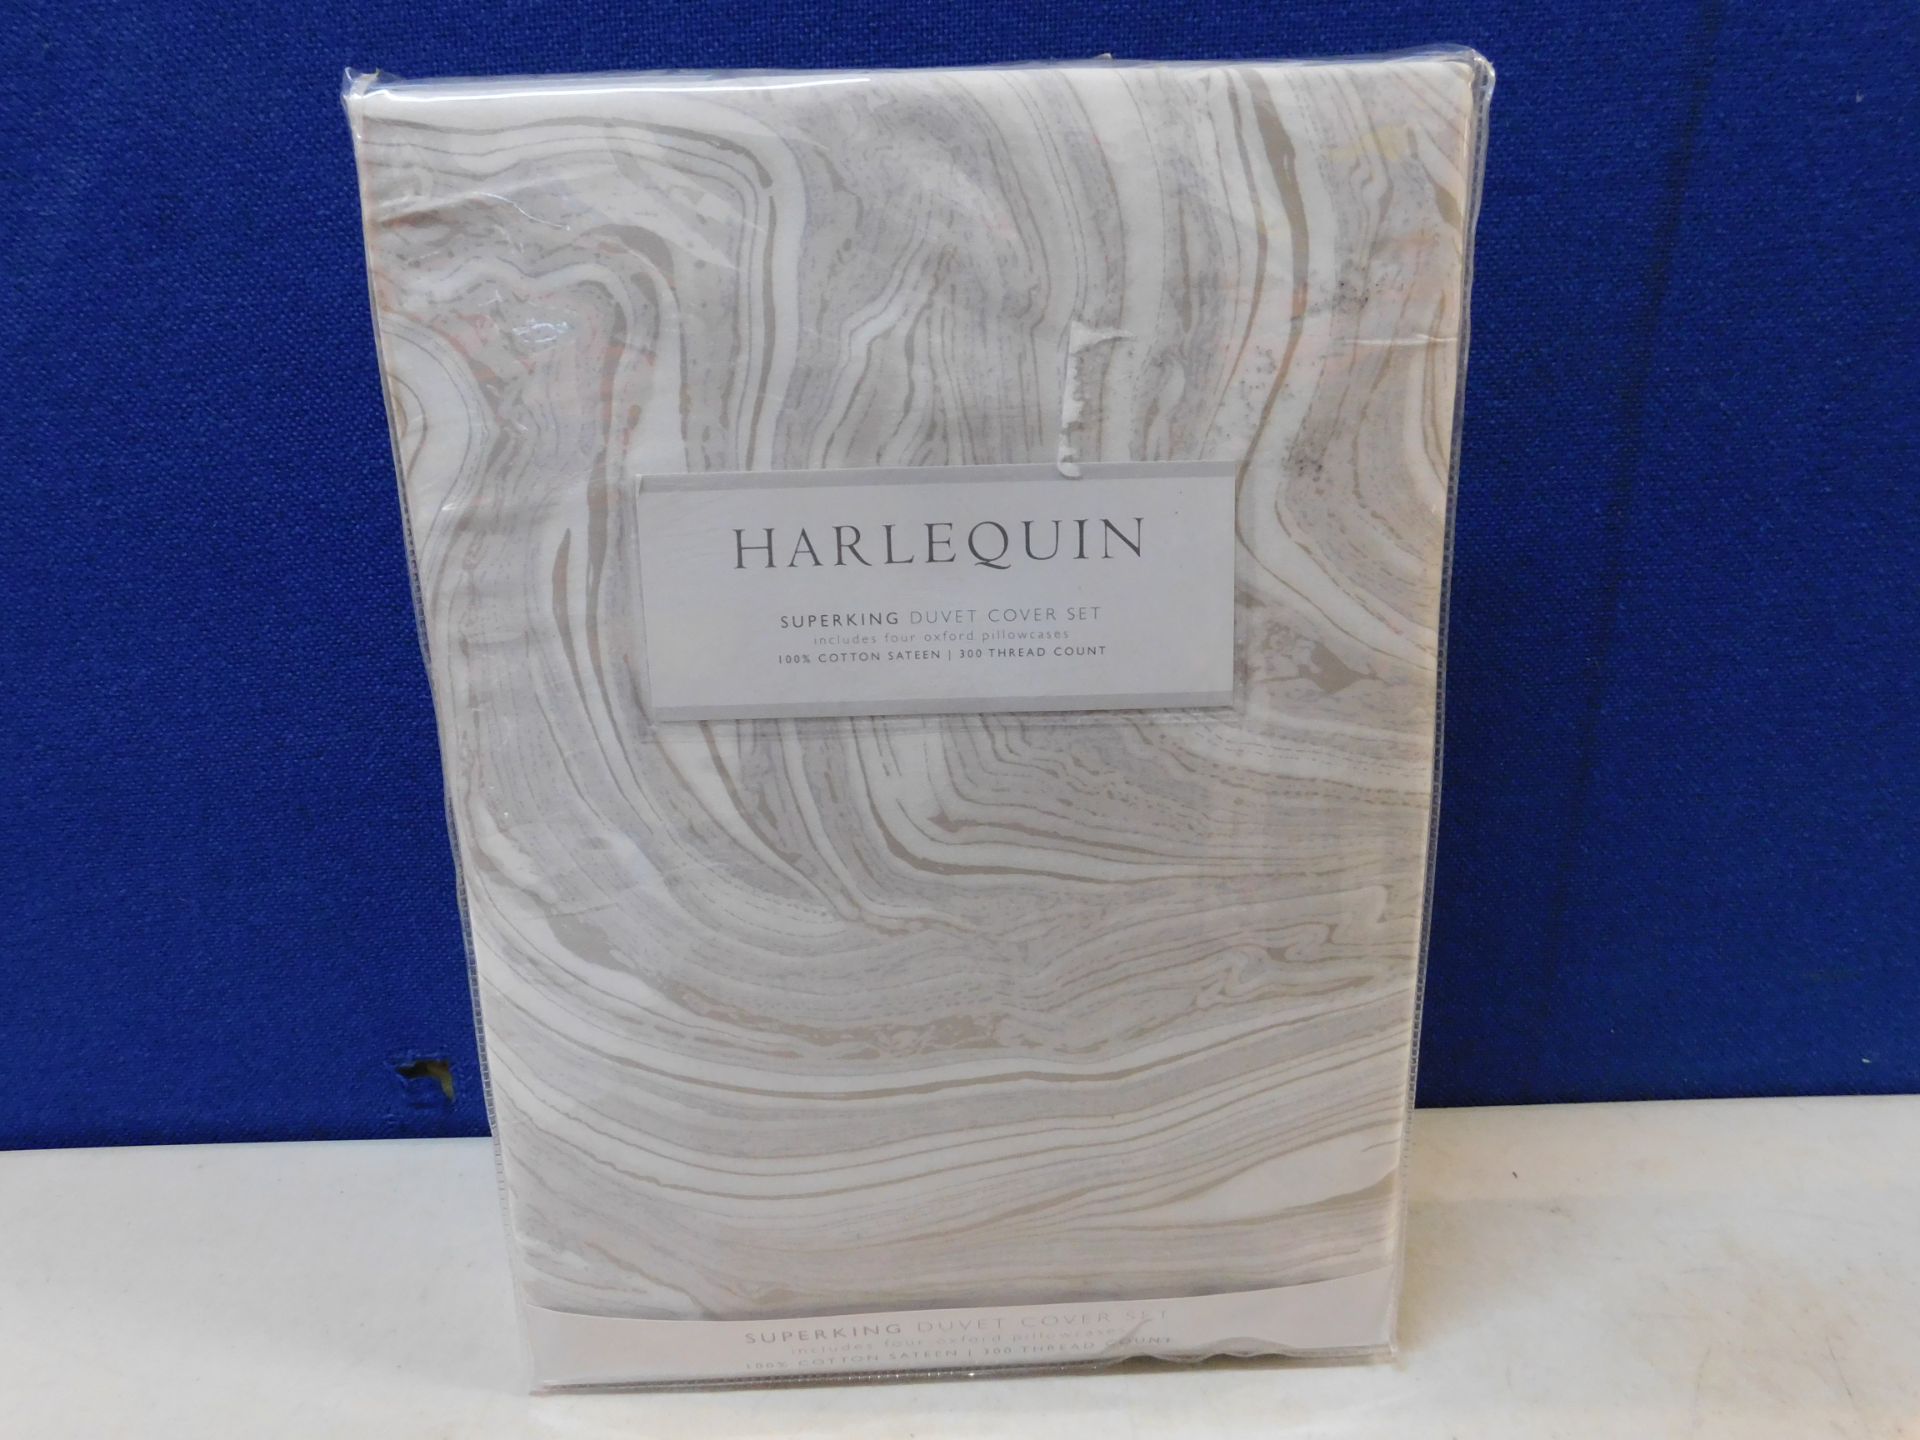 1 PACK OF HARLEQUIN 300TC SUPERKING DUVET COVER SET RRP Â£89.99